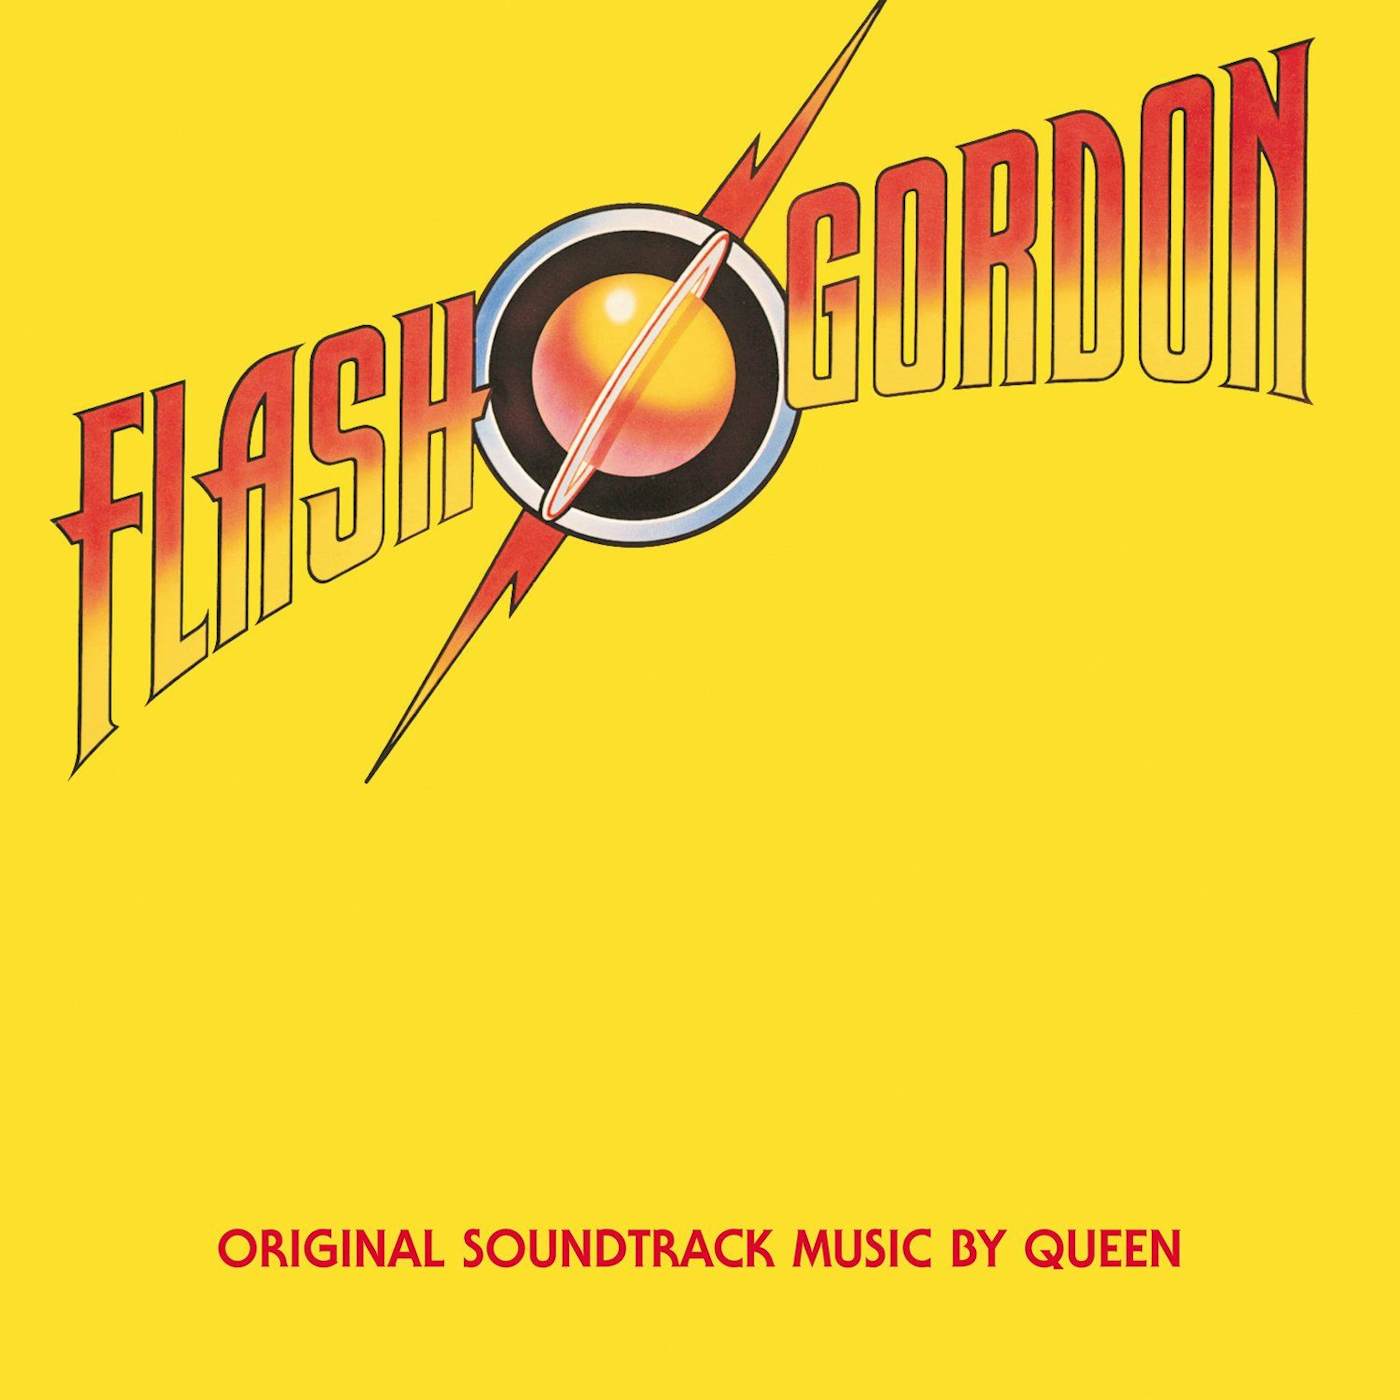 Queen LP Vinyl Record - Flash Gordon